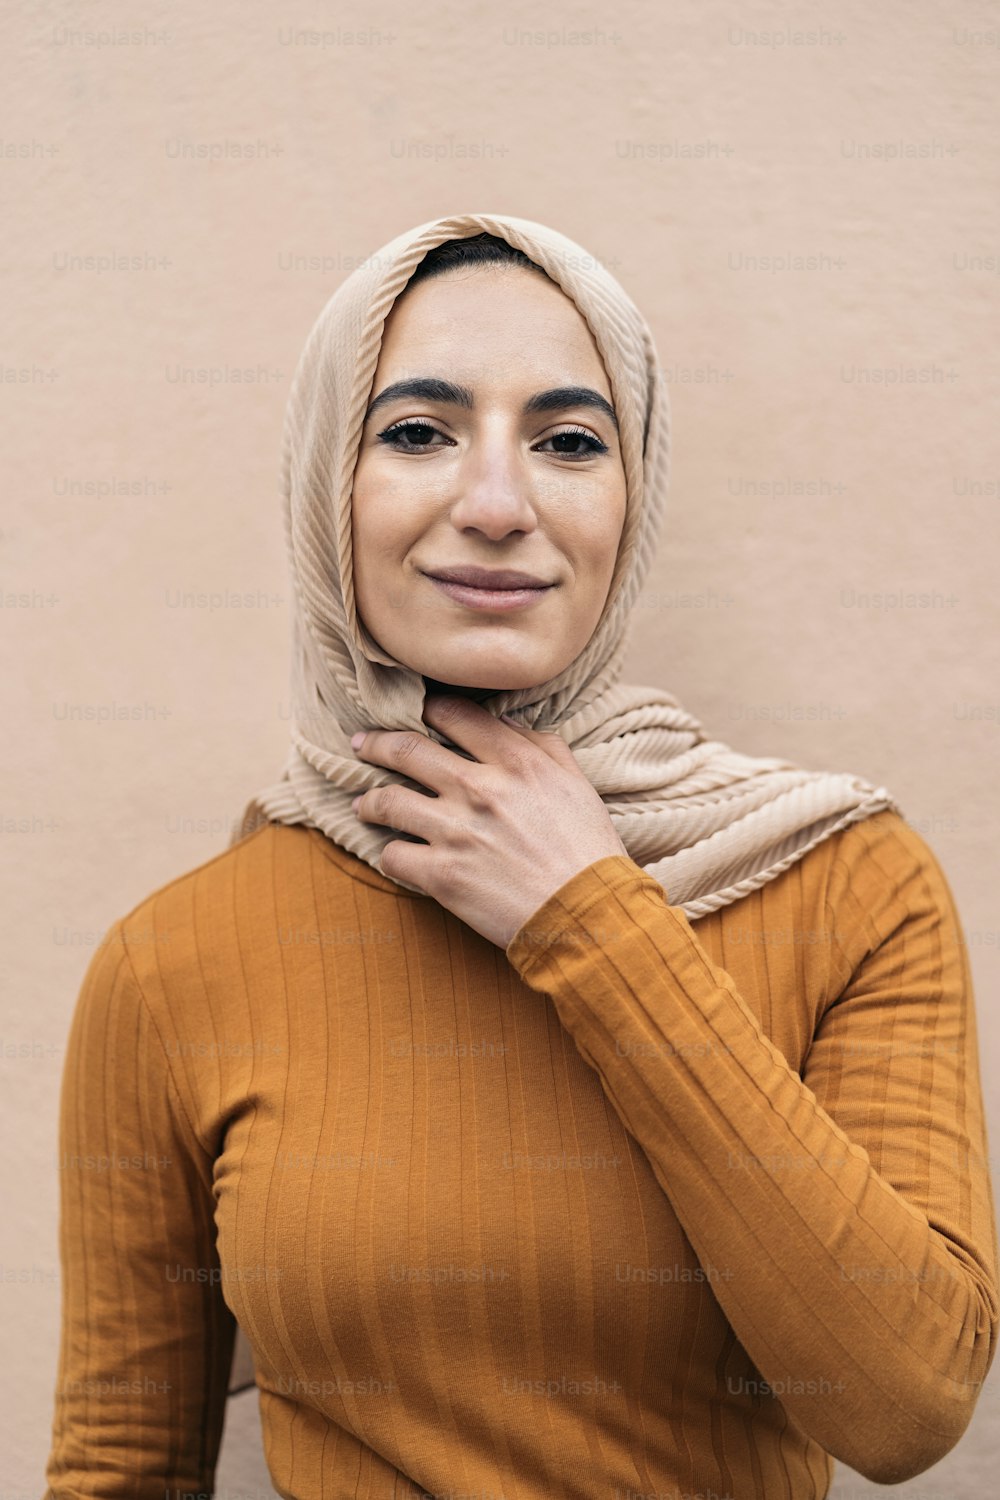 Heureuse jeune femme musulmane portant un foulard rose souriant et regardant la caméra.